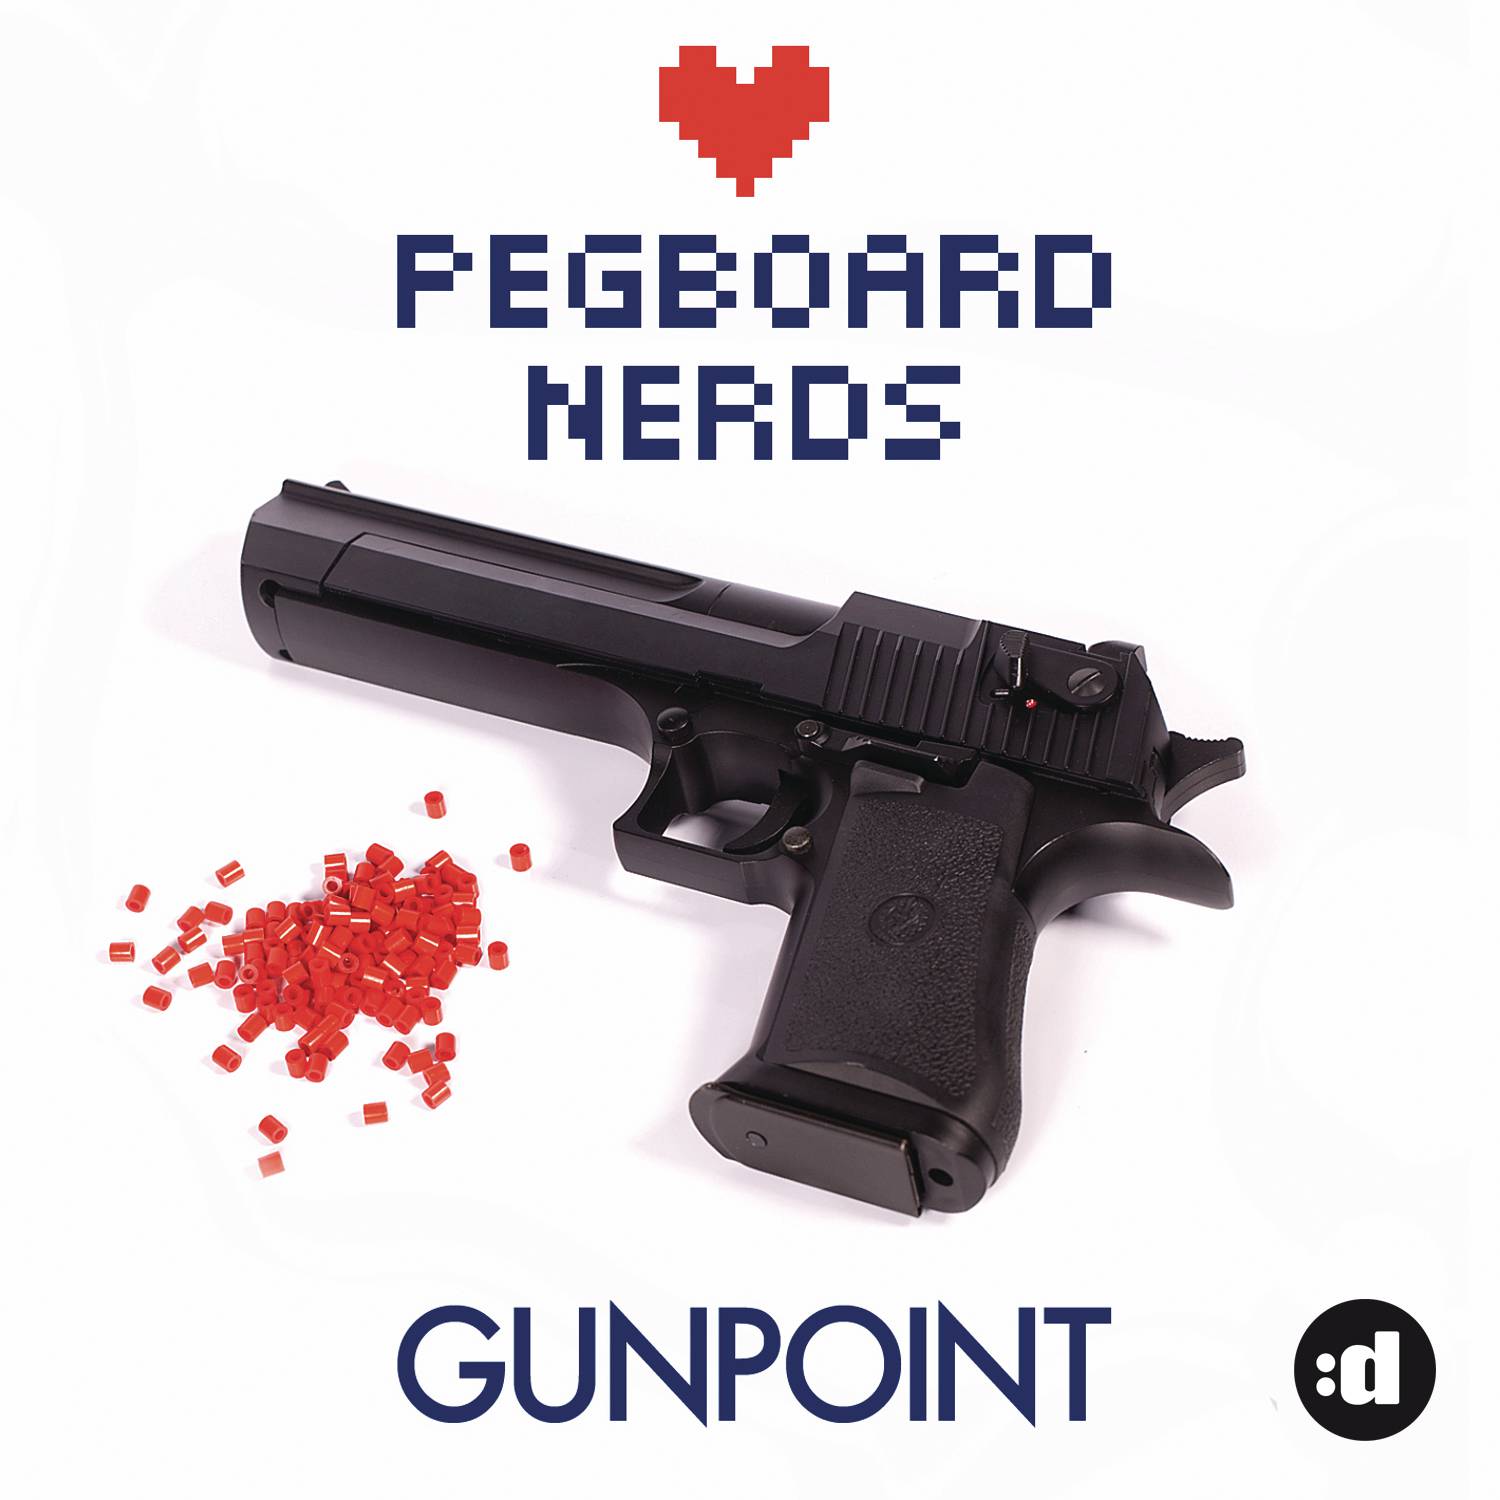 Gunpoint (Original)